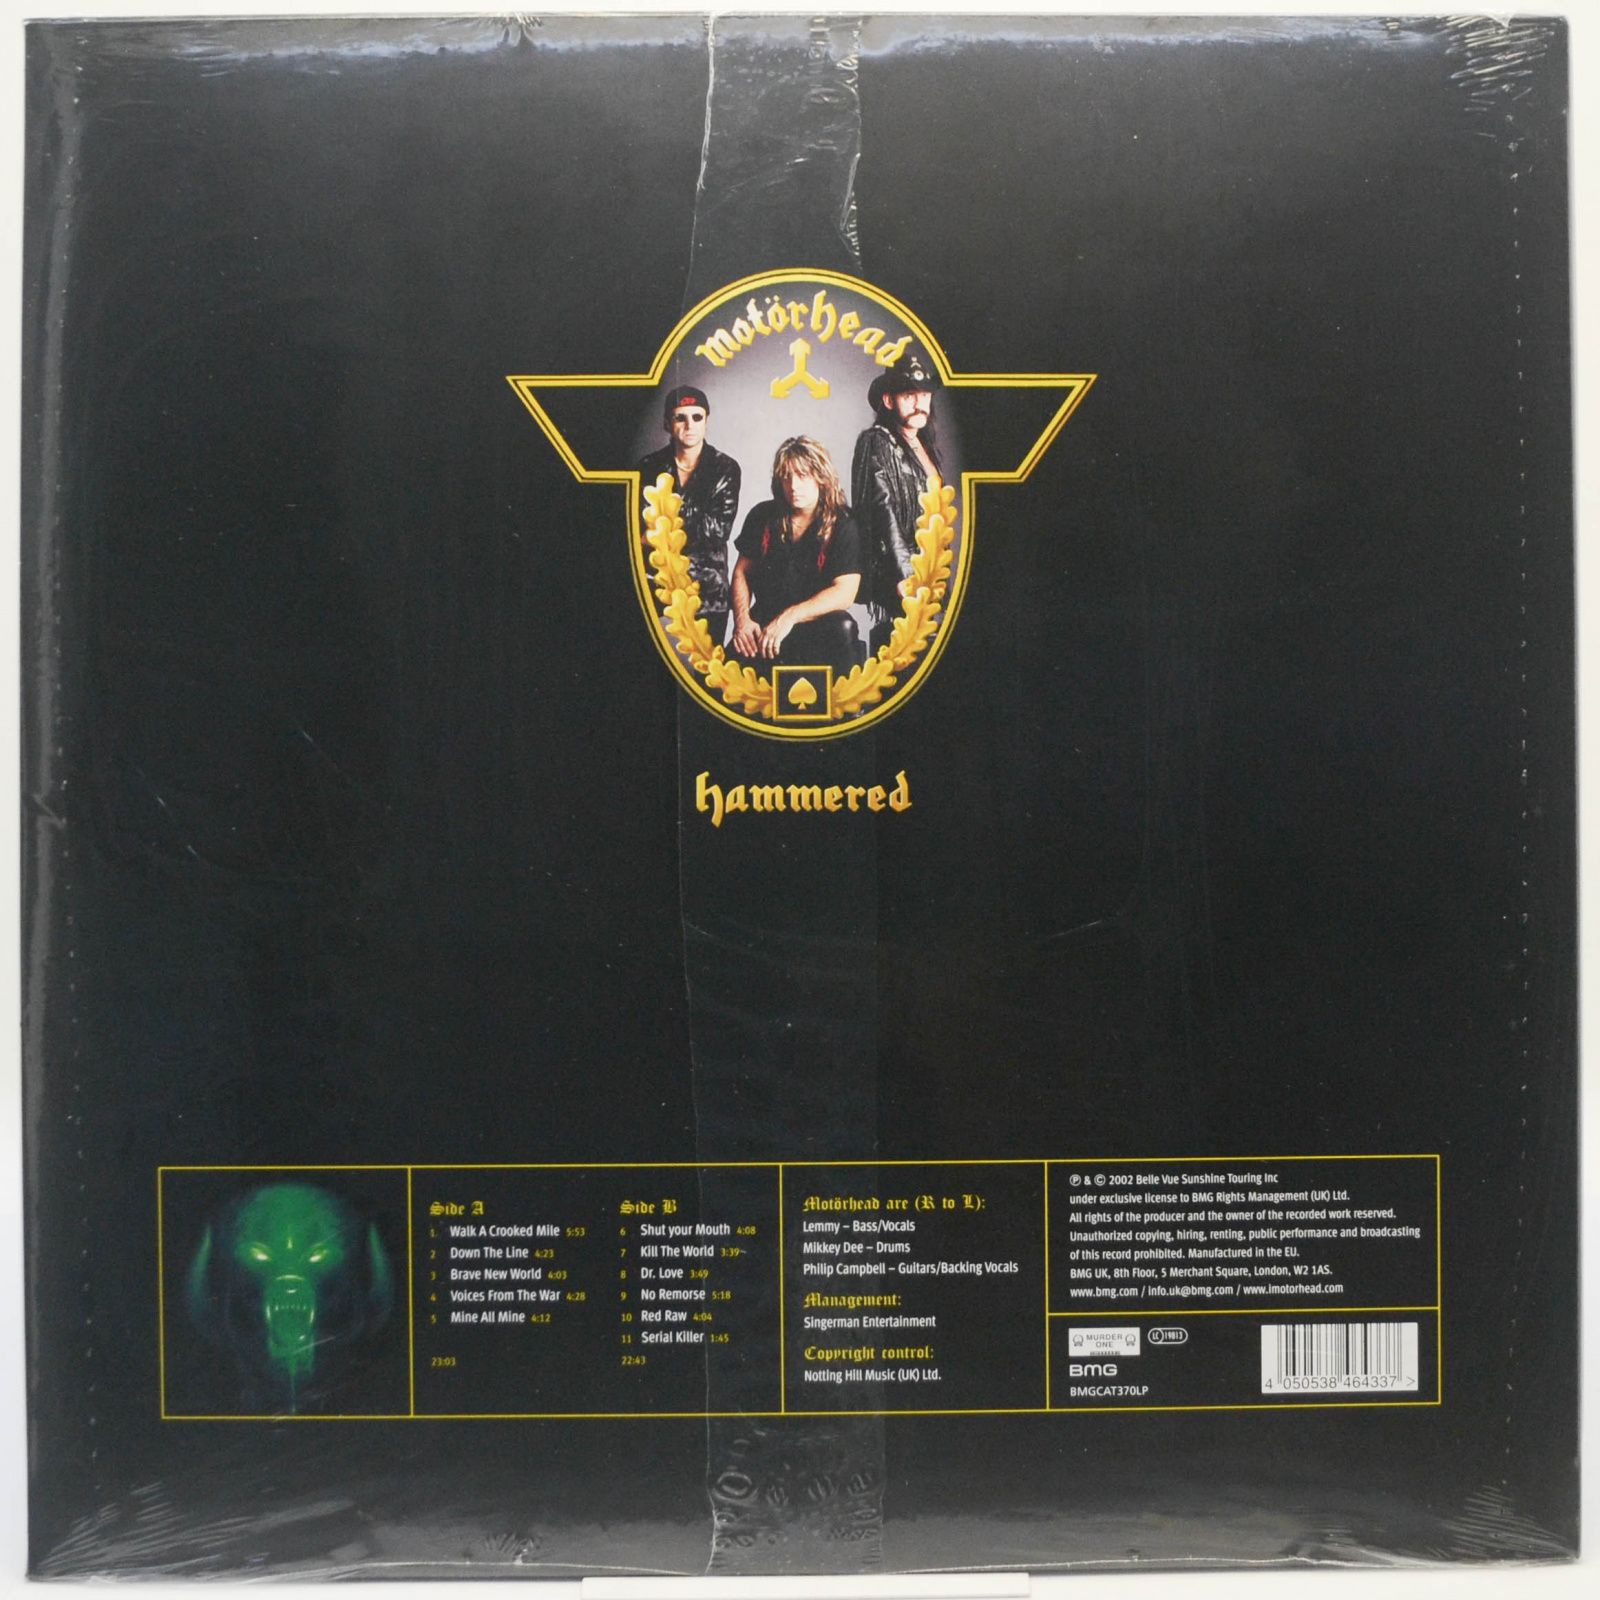 Motörhead — Hammered (UK), 2002